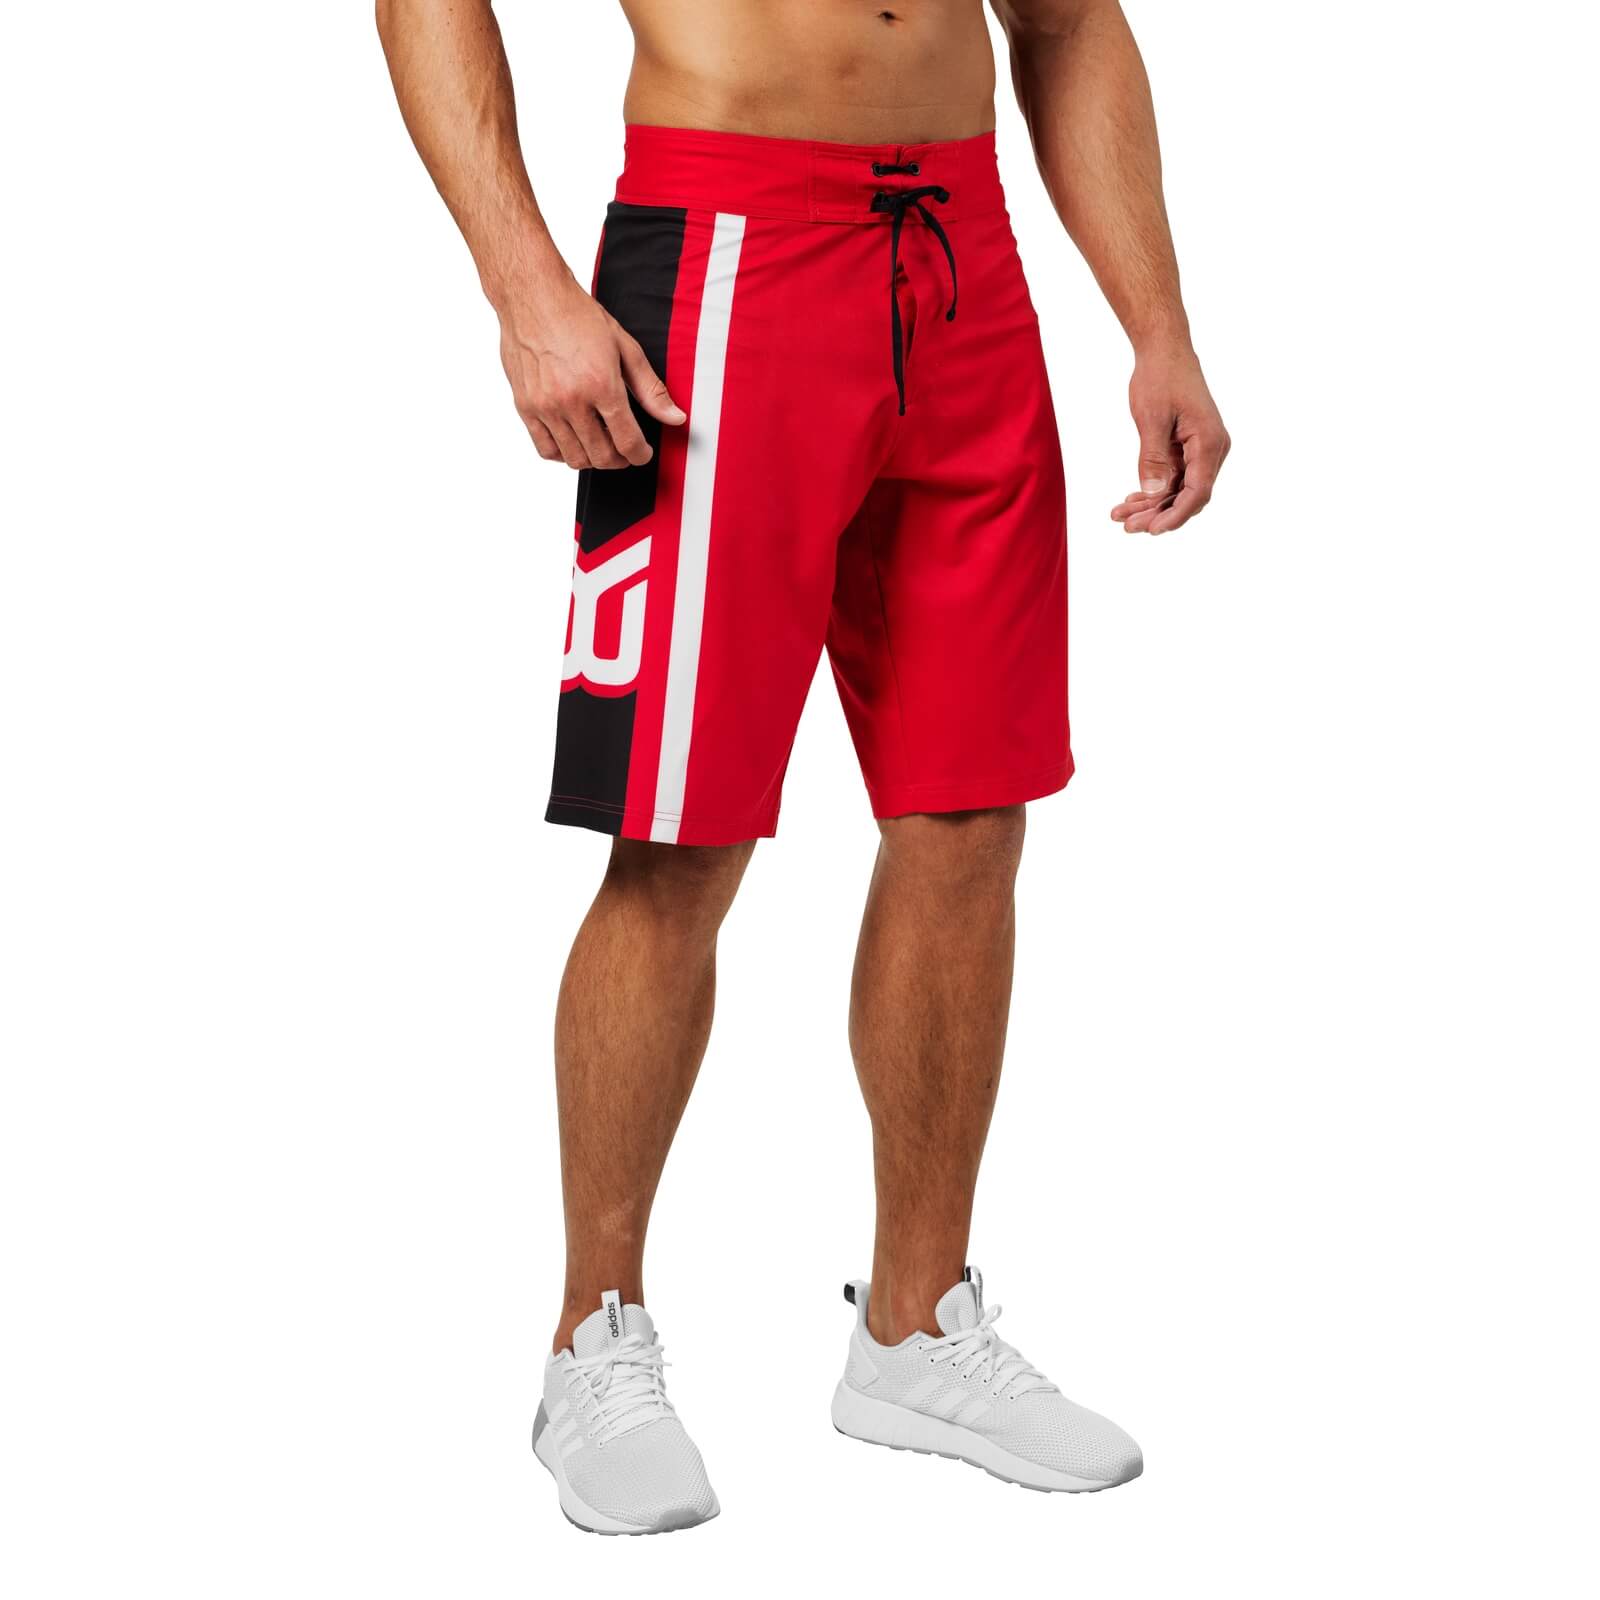 Kolla in Ript Shorts, bright red, Better Bodies hos SportGymButiken.se